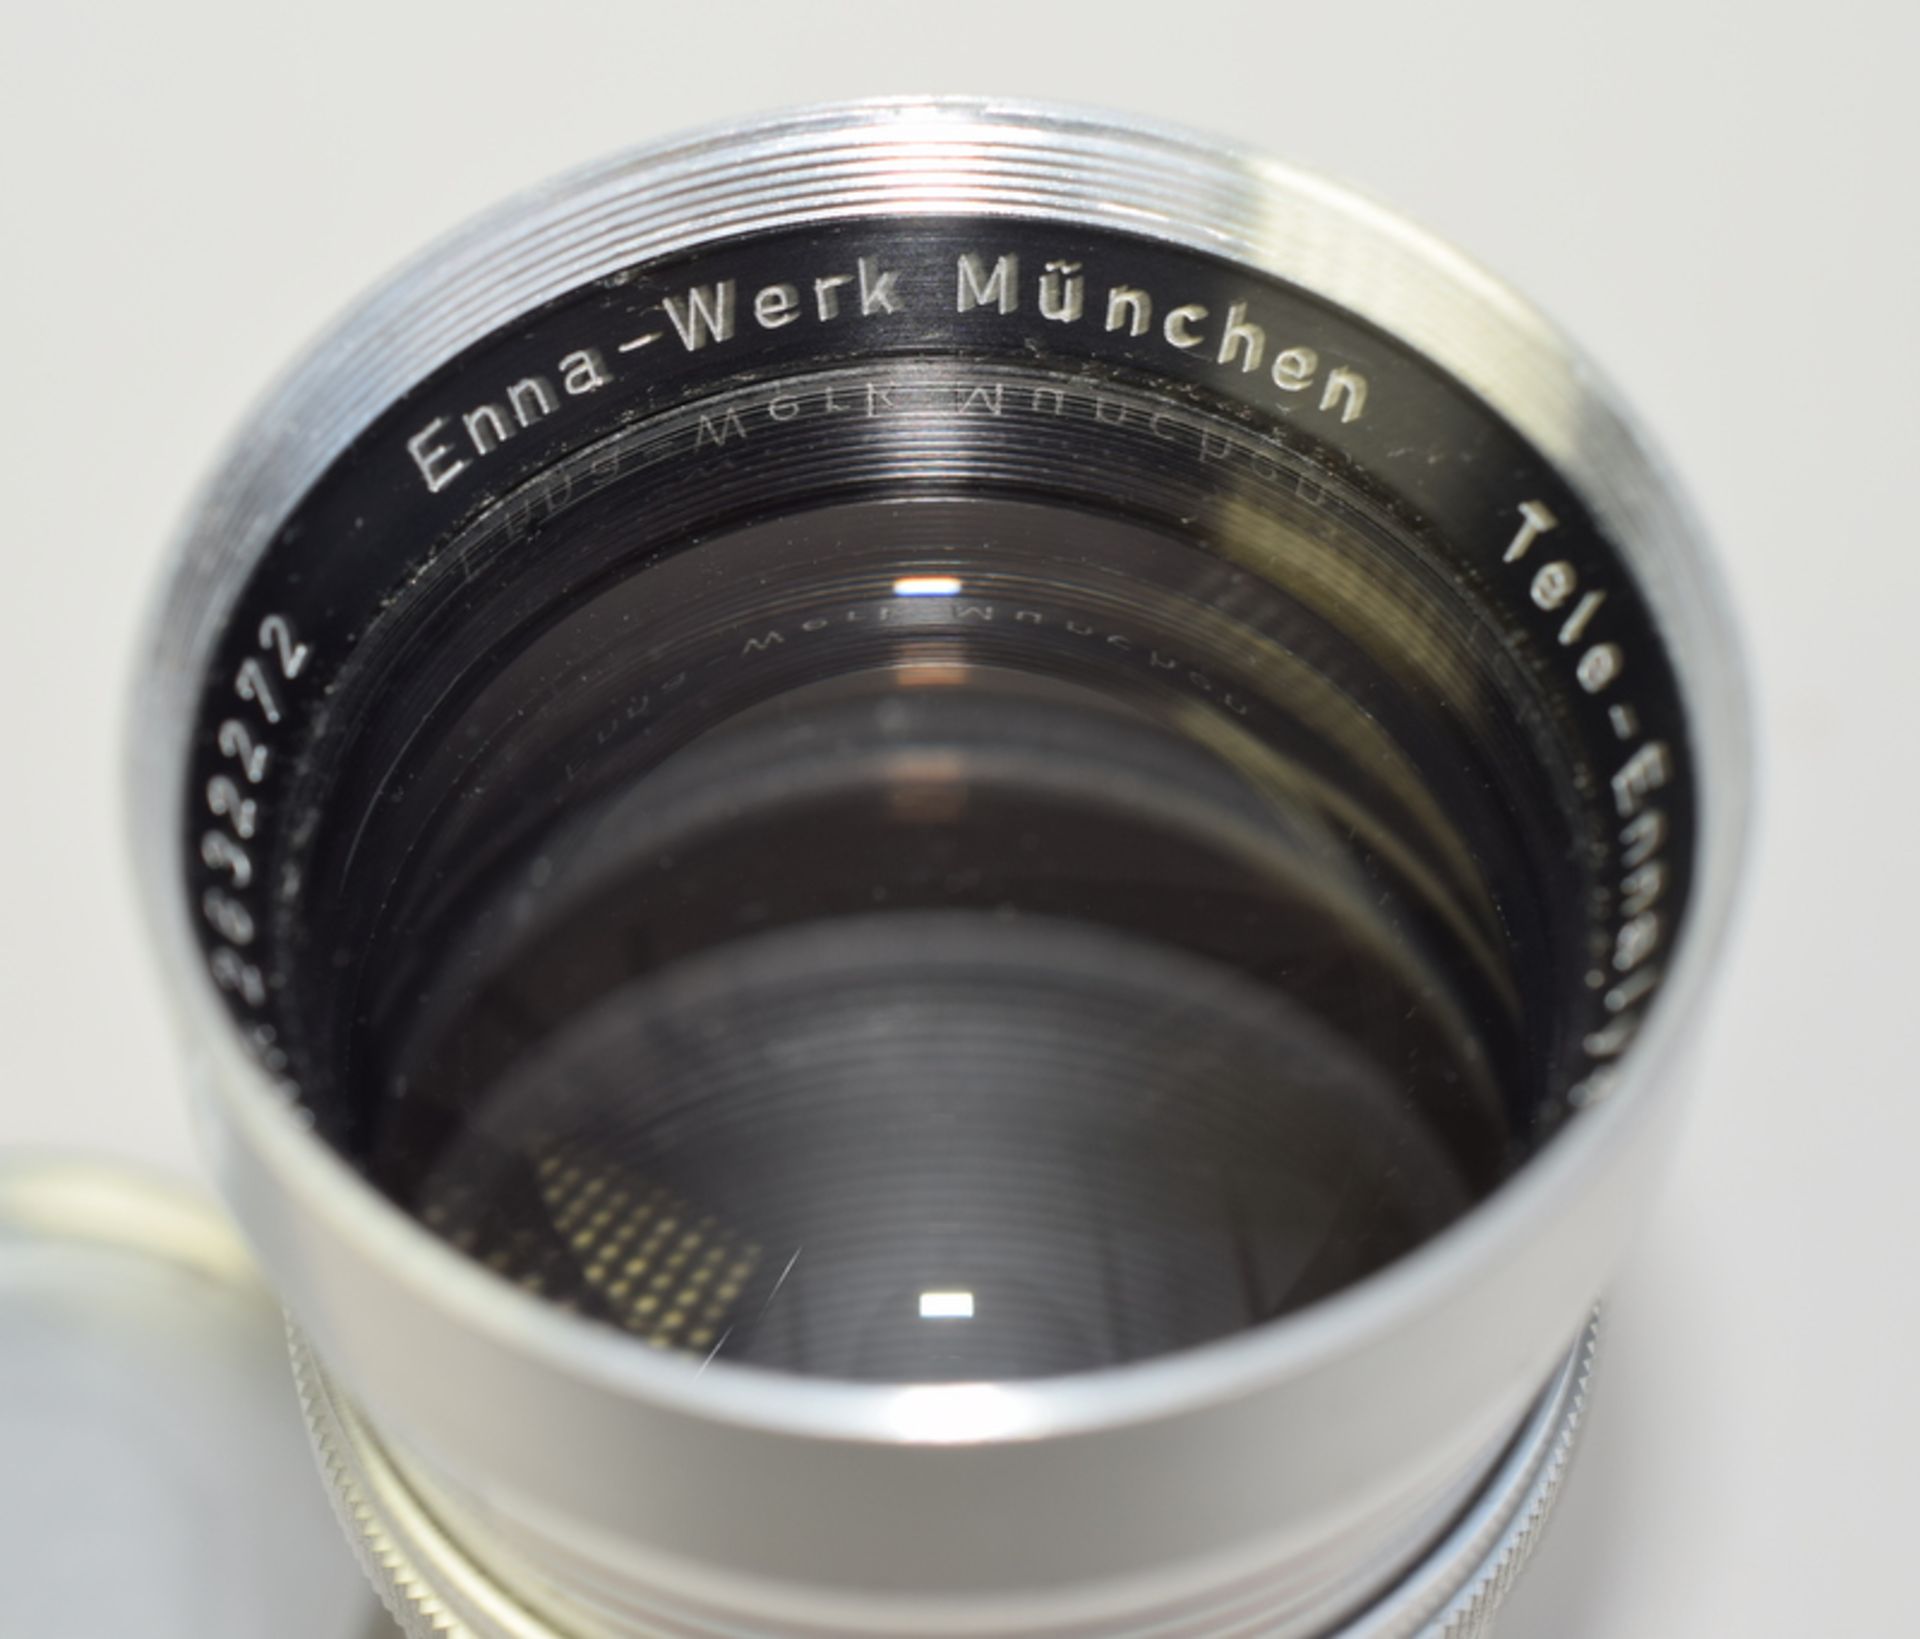 Enna Werk München Tele Ennalyt 13,513,5cm Lens - Image 3 of 5